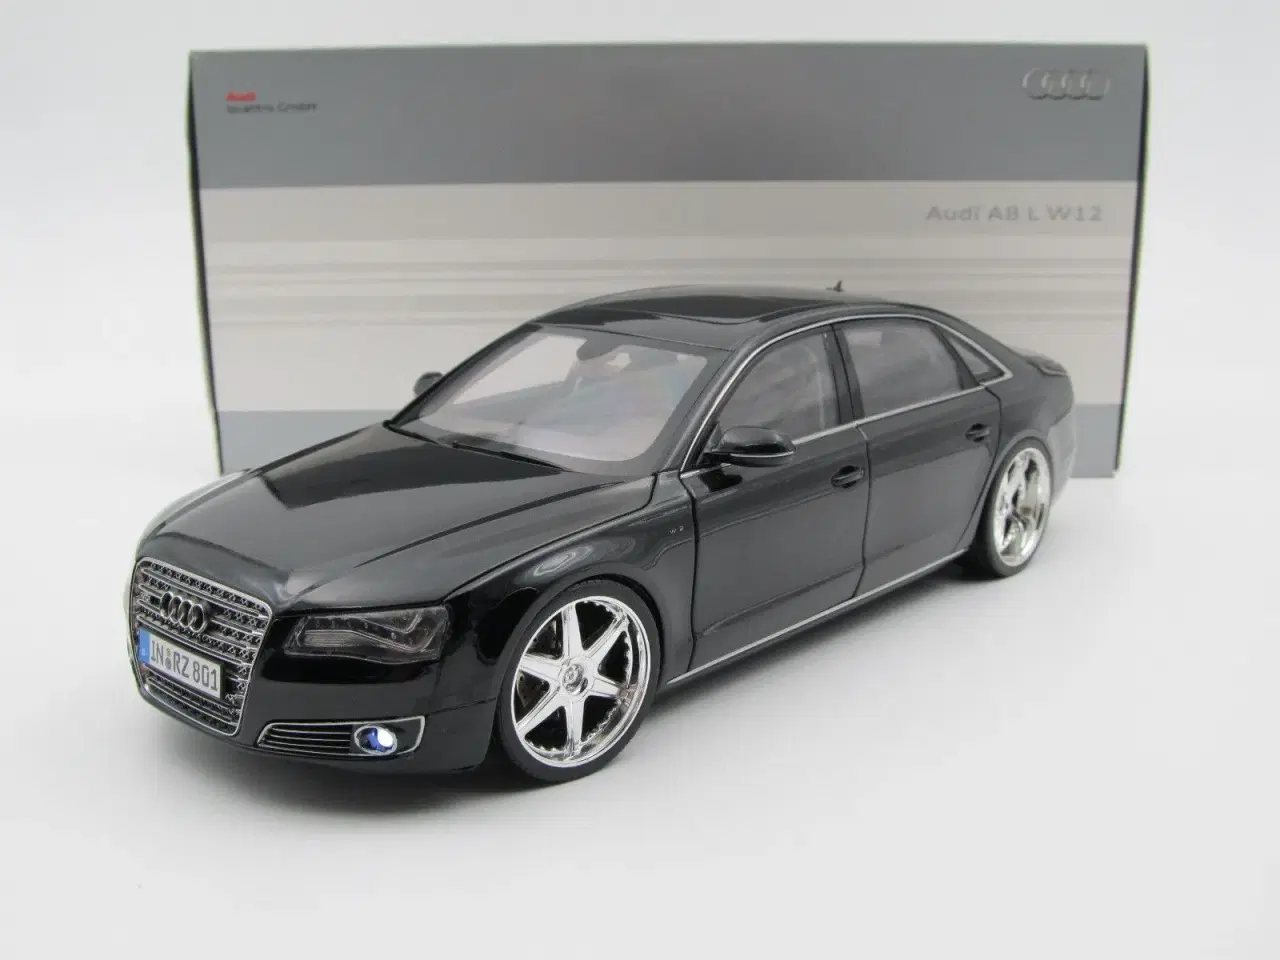 Billede 2 - 2010 Audi A8L W12 LED lys og Panoramatag 1:18  